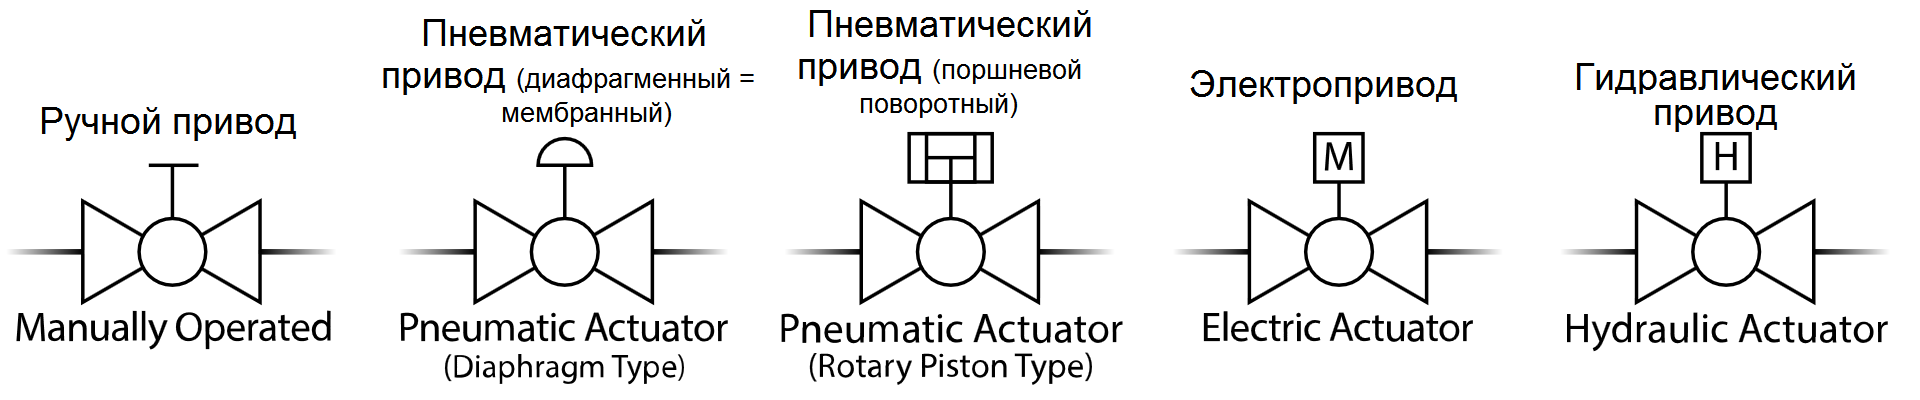 Тип привода трубопроводной арматуры - символ для P&ID